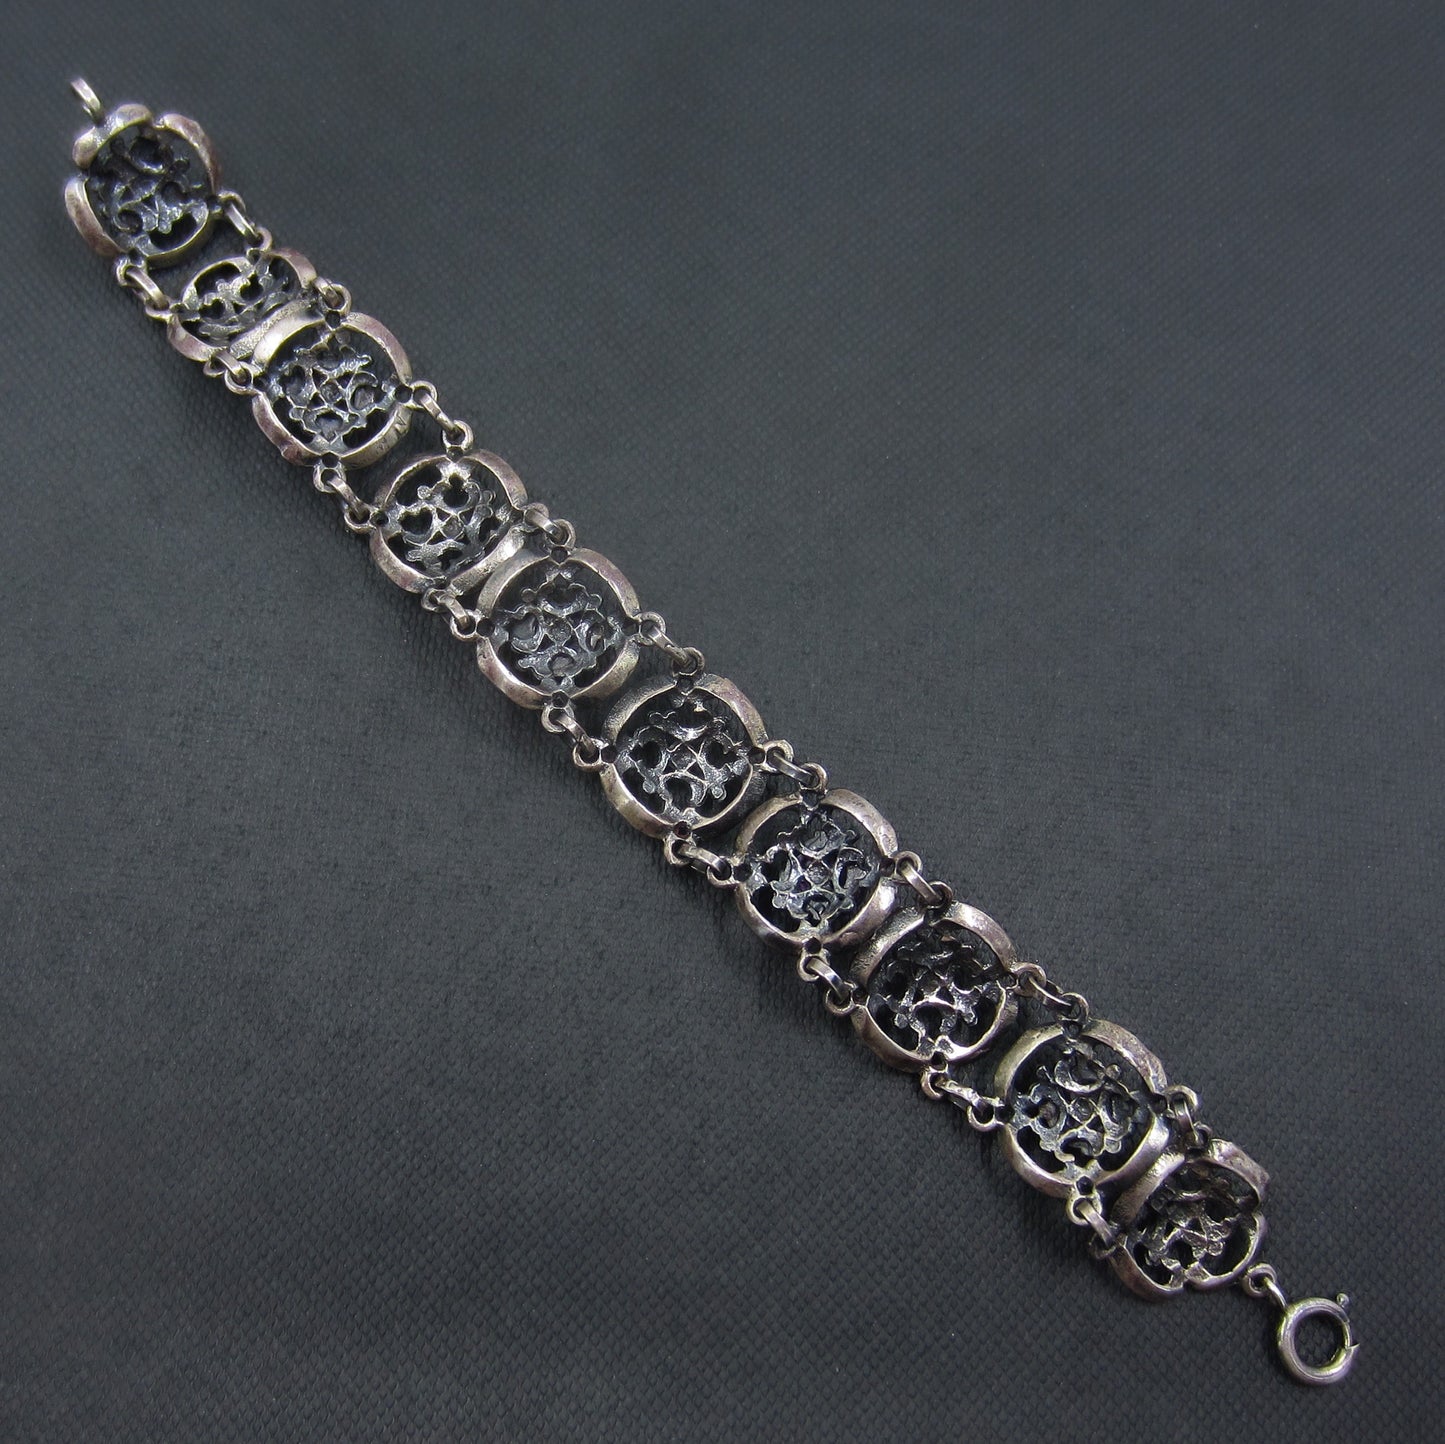 SOLD--Victorian Renaissance Revival Amethyst Bracelet Sterling c. 1890